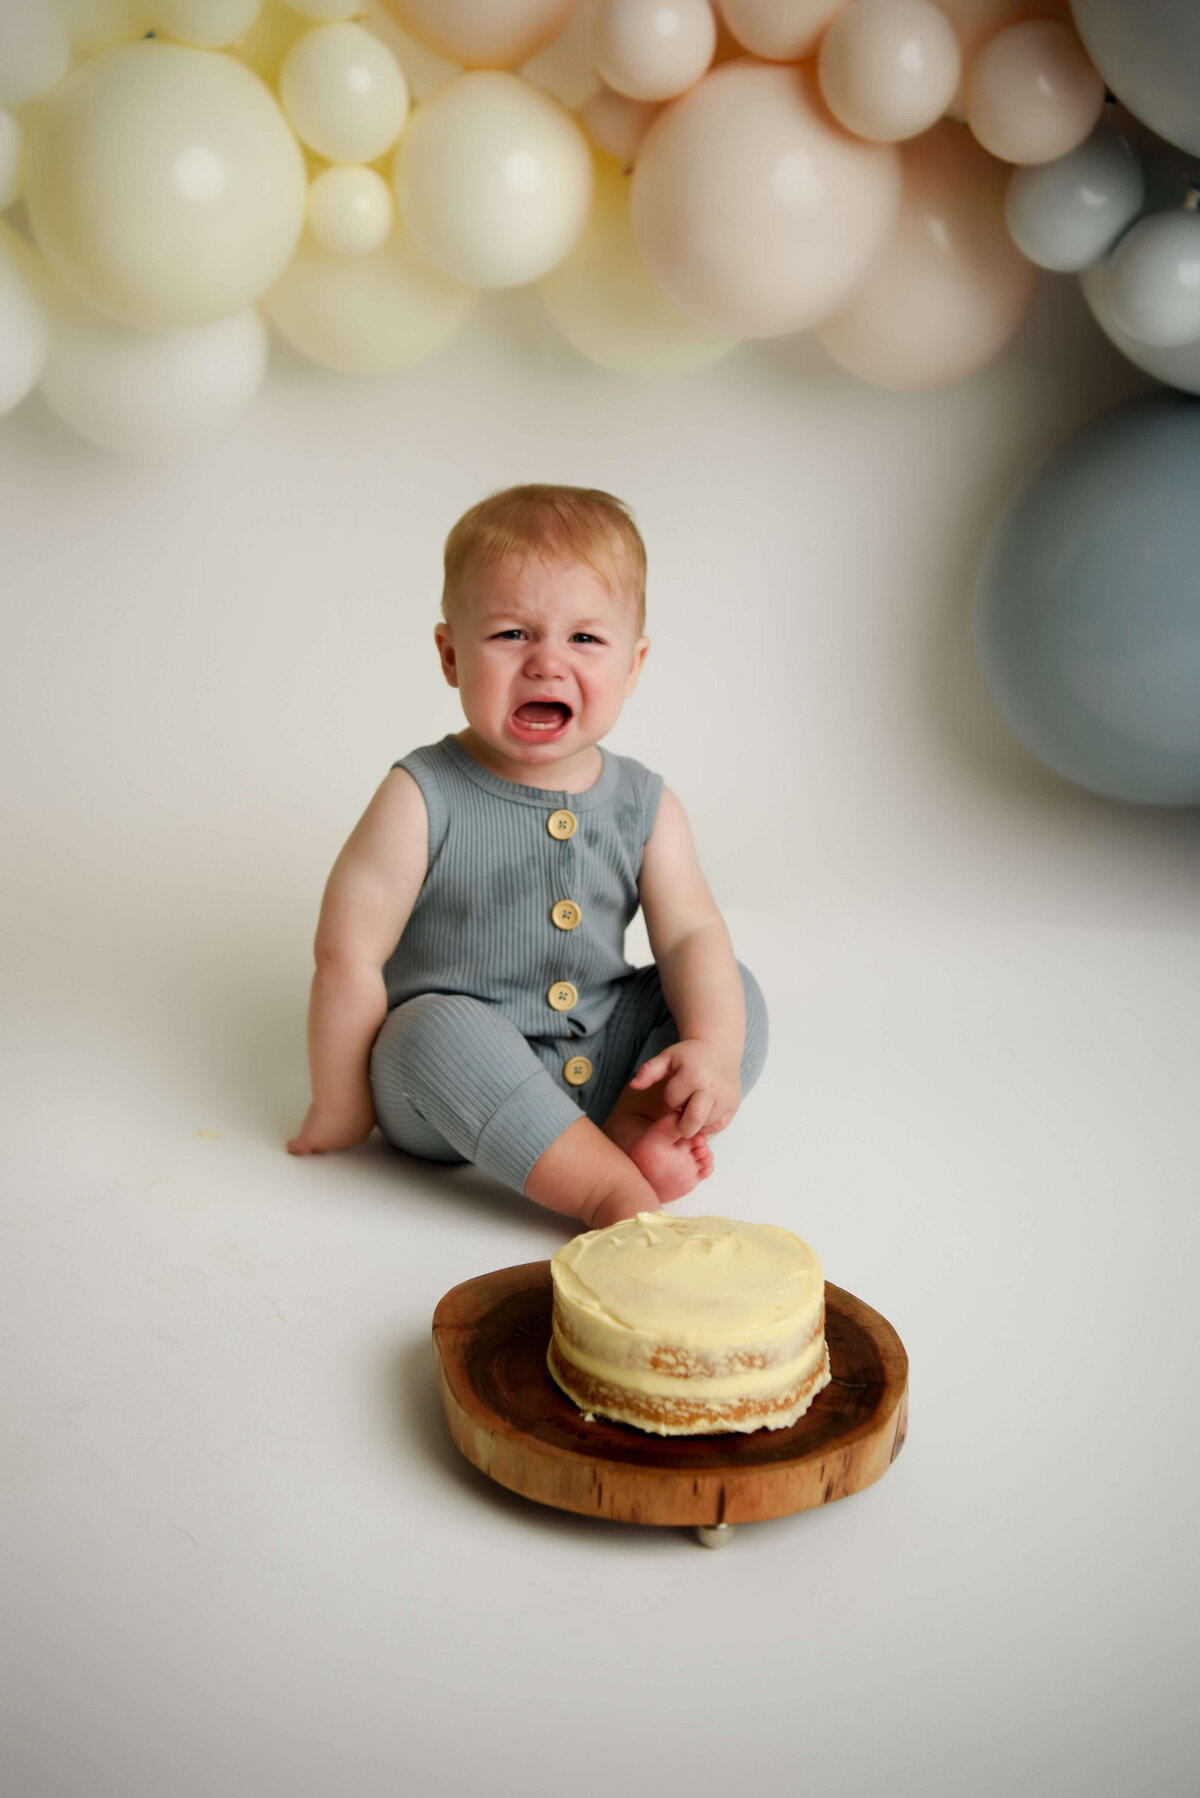 One year old crying during cake smash